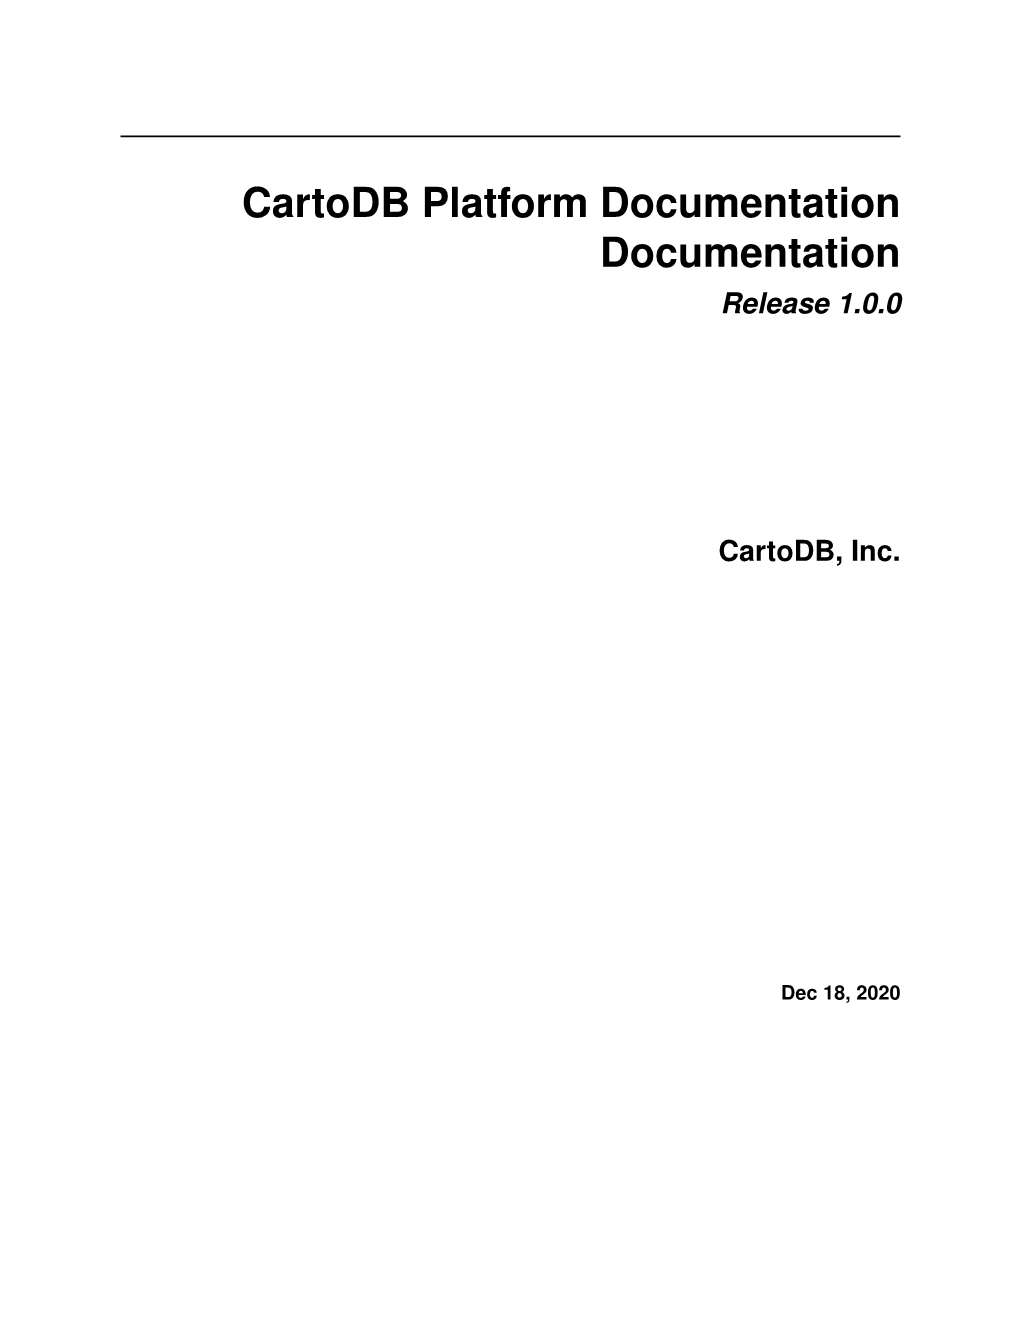 Cartodb Platform Documentation Documentation Release 1.0.0